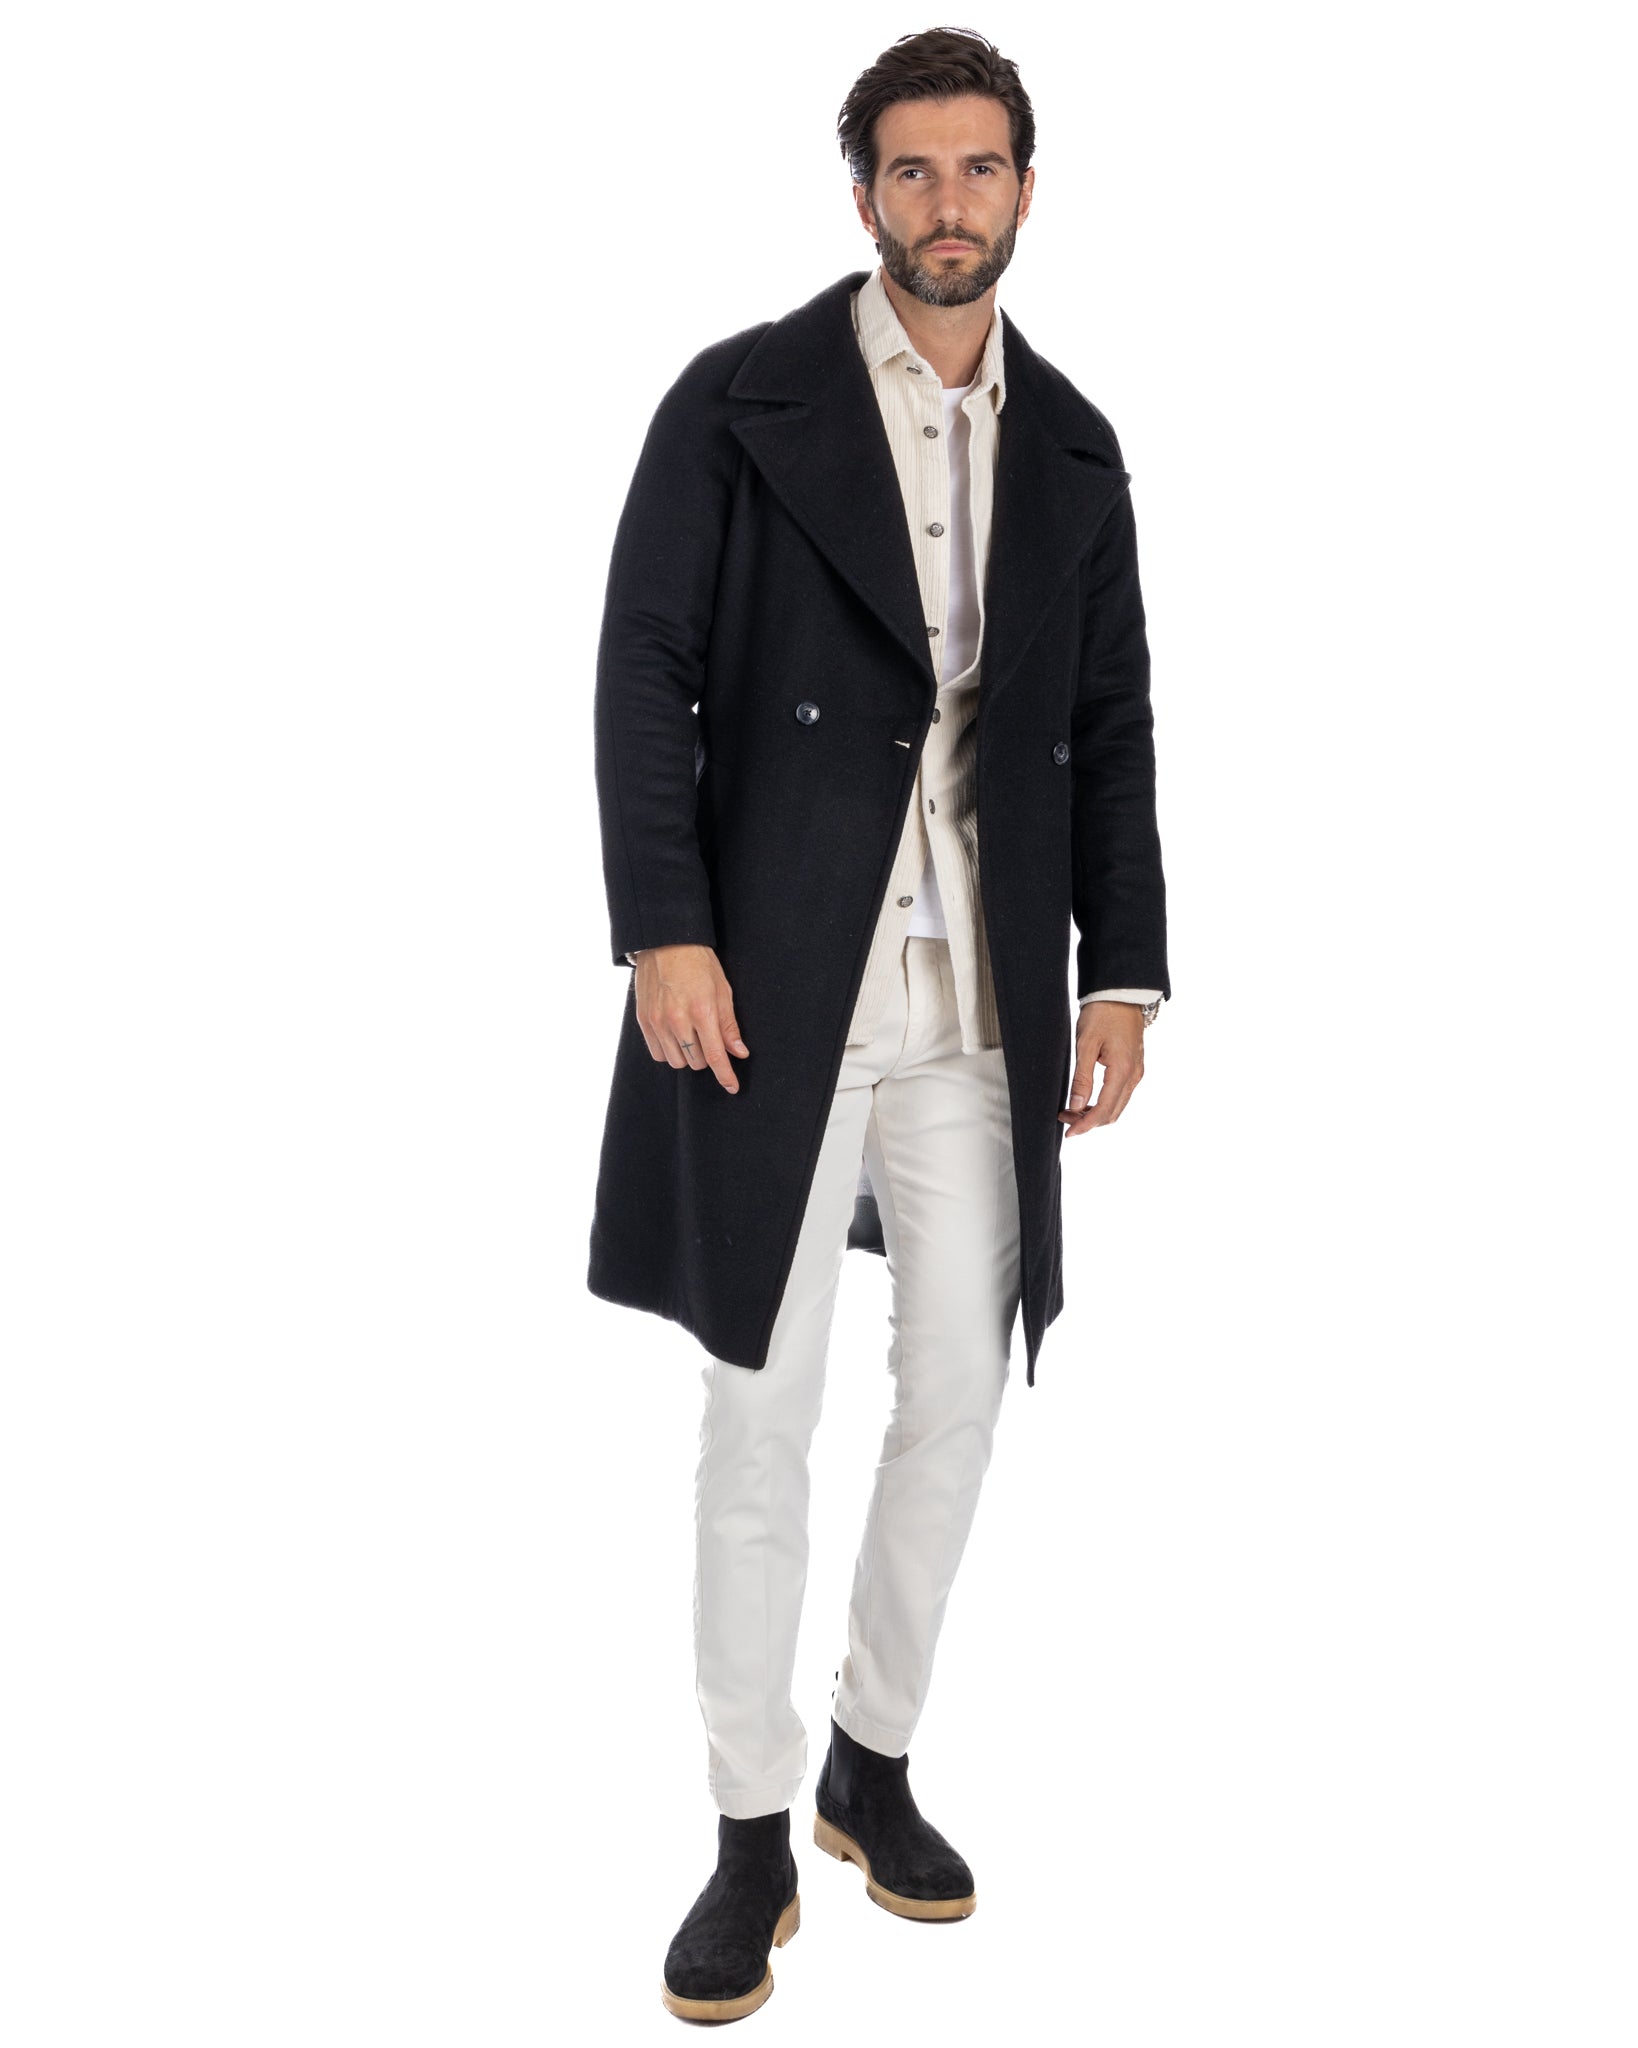 Claude - manteau peignoir gris clair